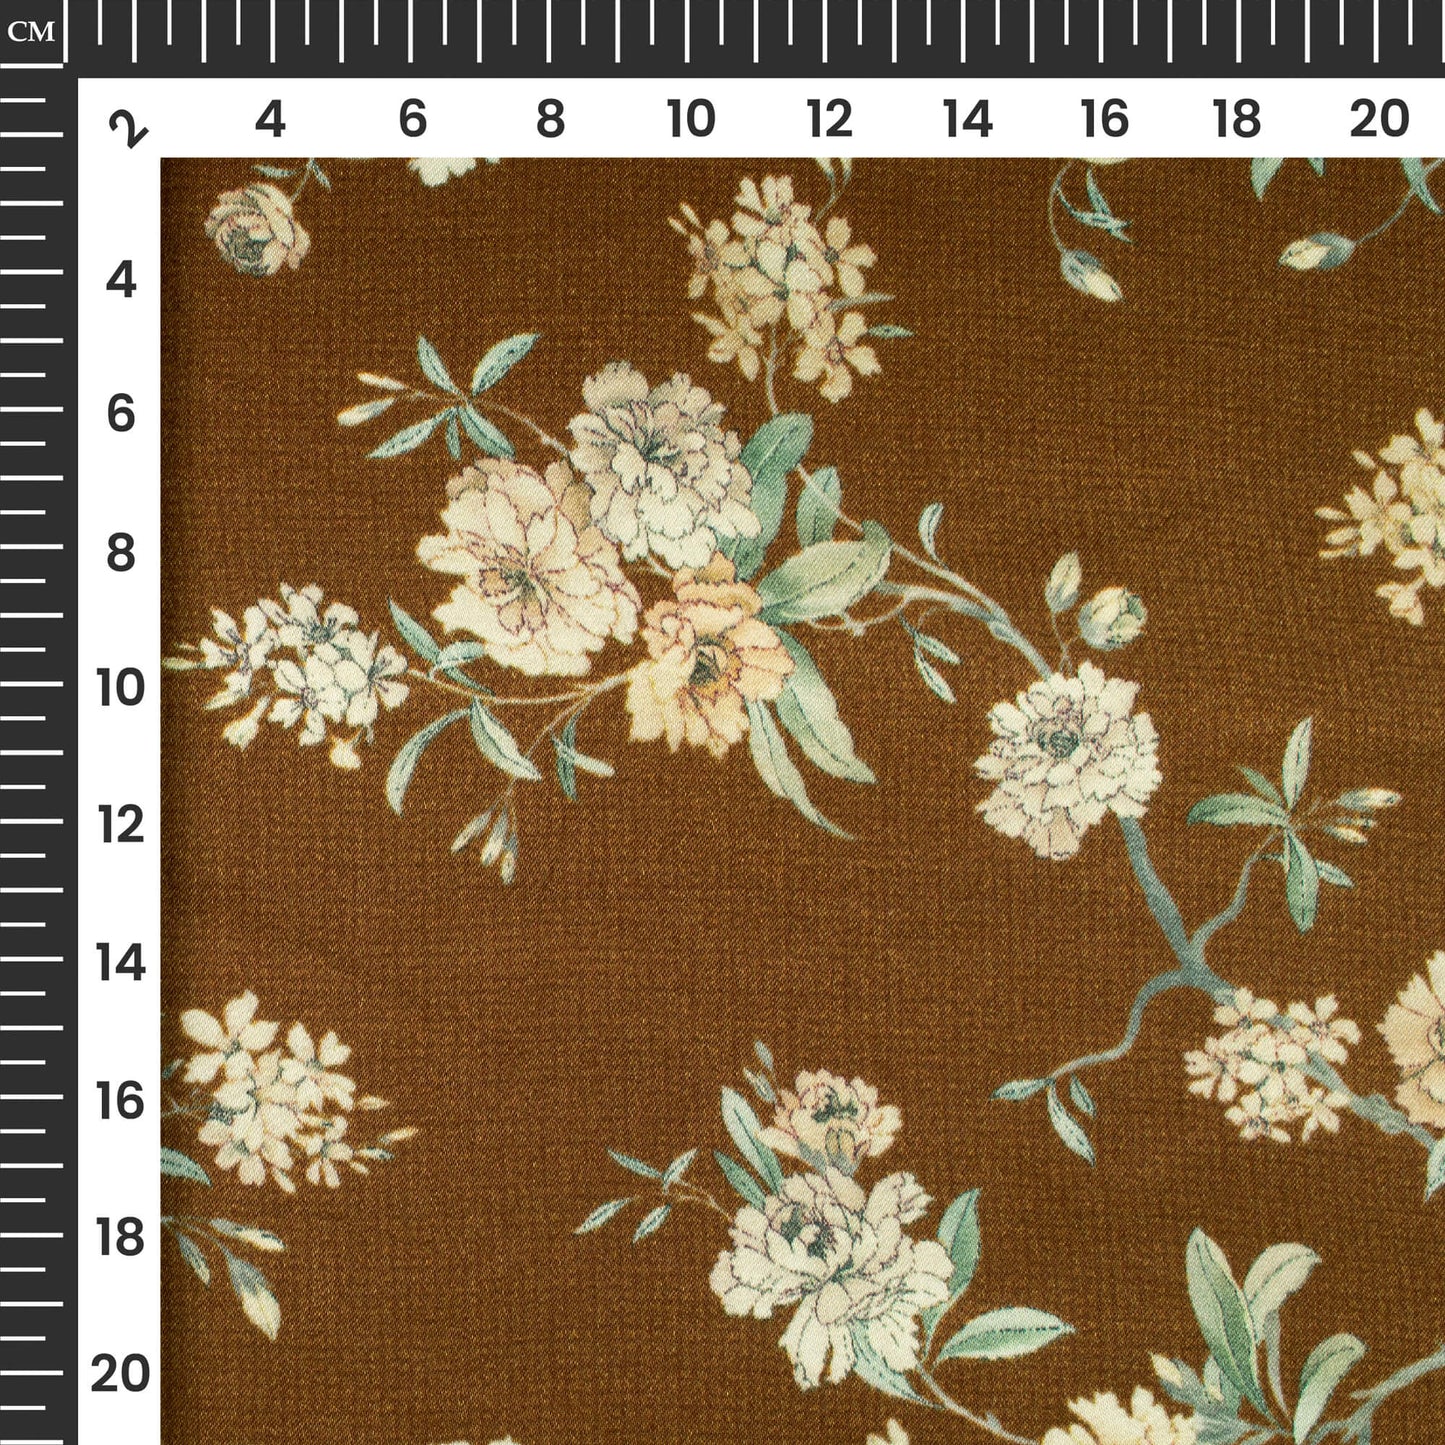 Coffee Brown And Cream Floral Digital Print Viscose Gaji Silk Fabric